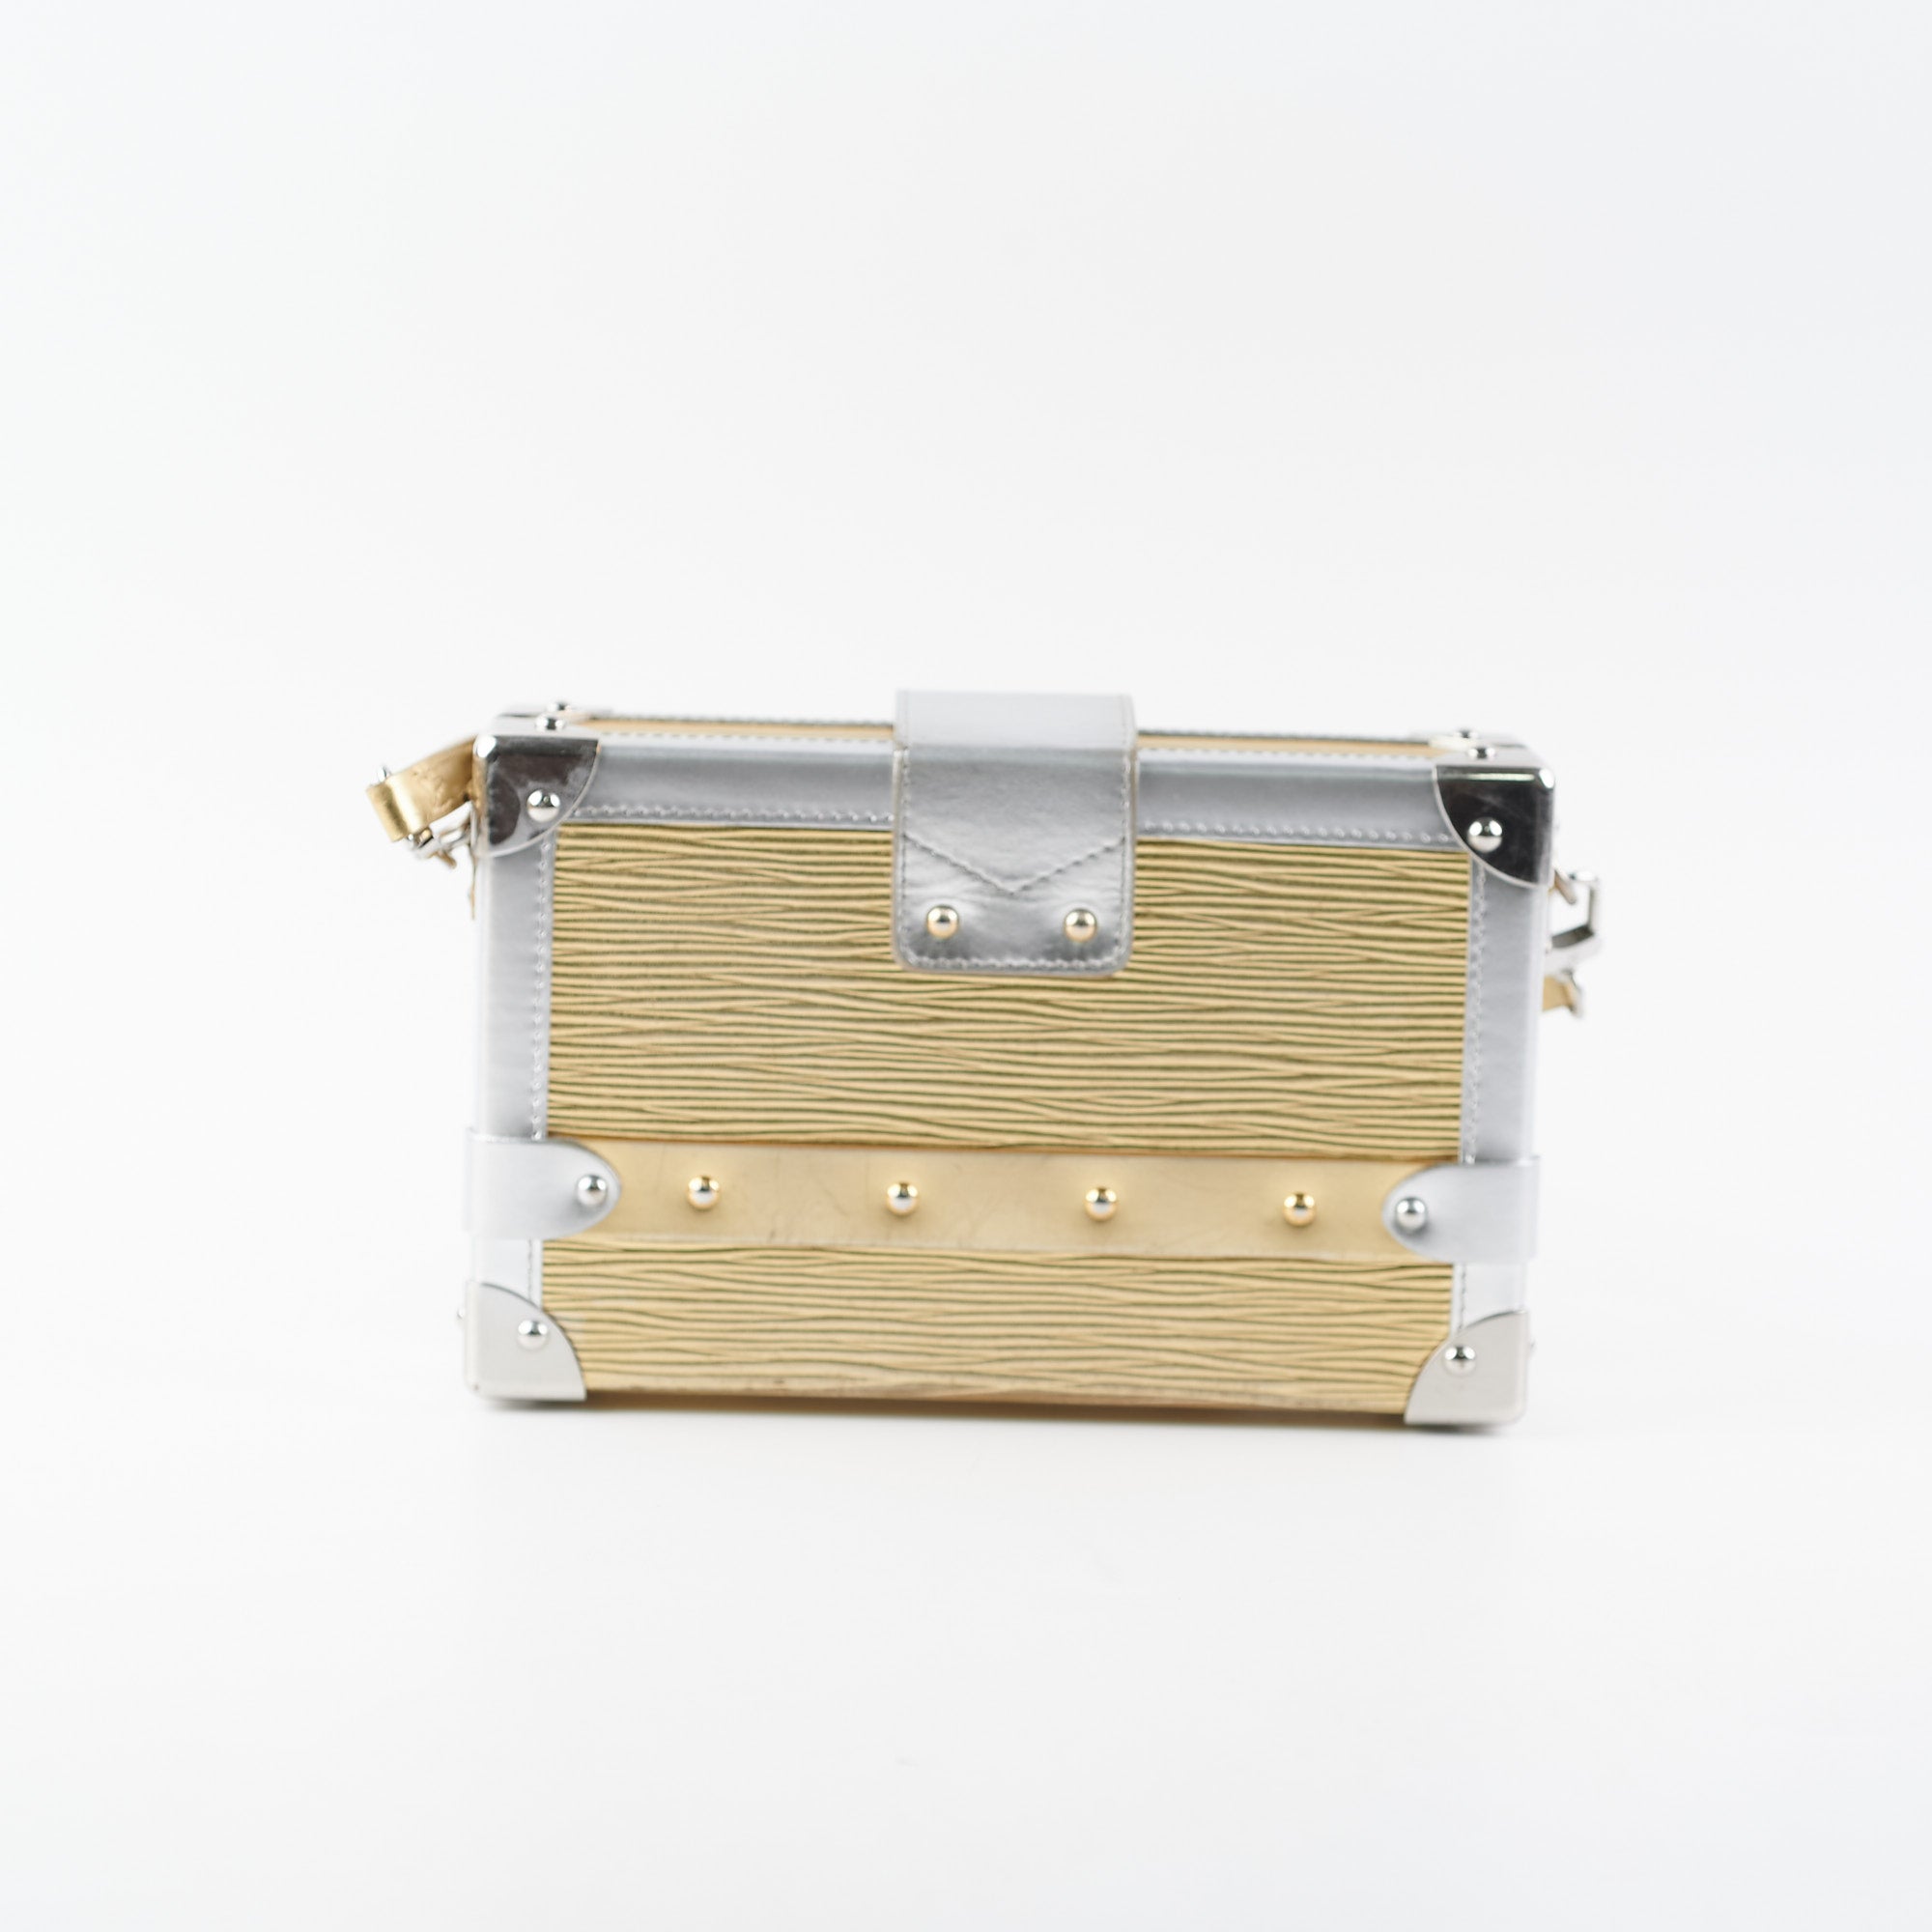 LOUIS VUITTON Petite Malle Handbag Python silver hardware 510011